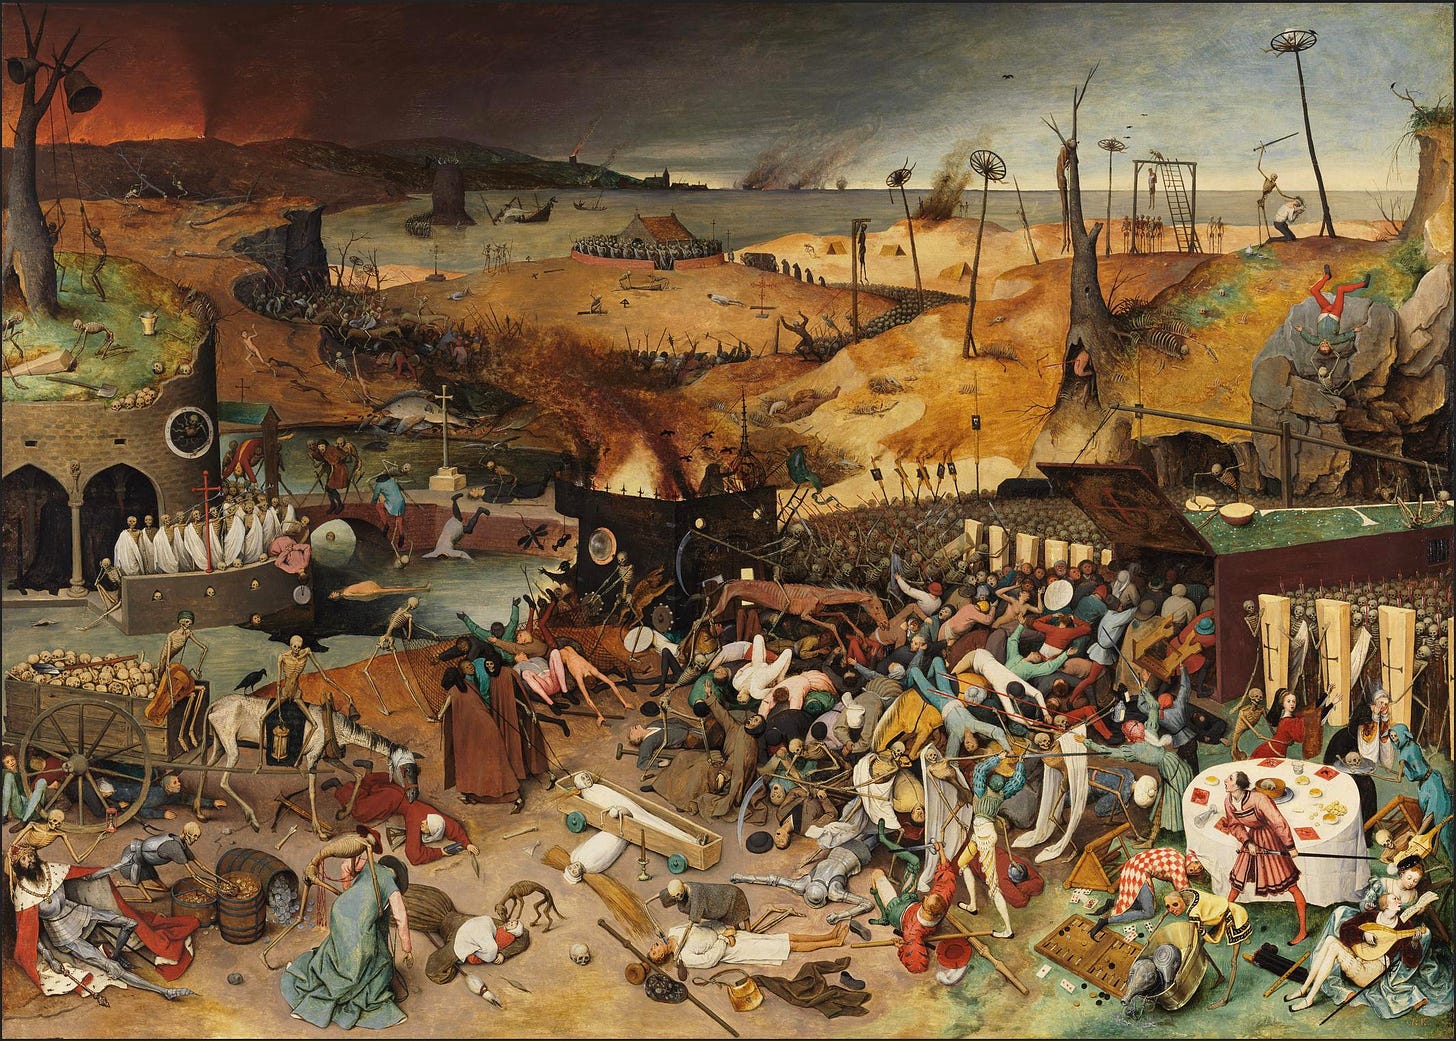 Pieter Bruegel the Elder, The Triumph of Death. Courtesy Wikimedia Commons.